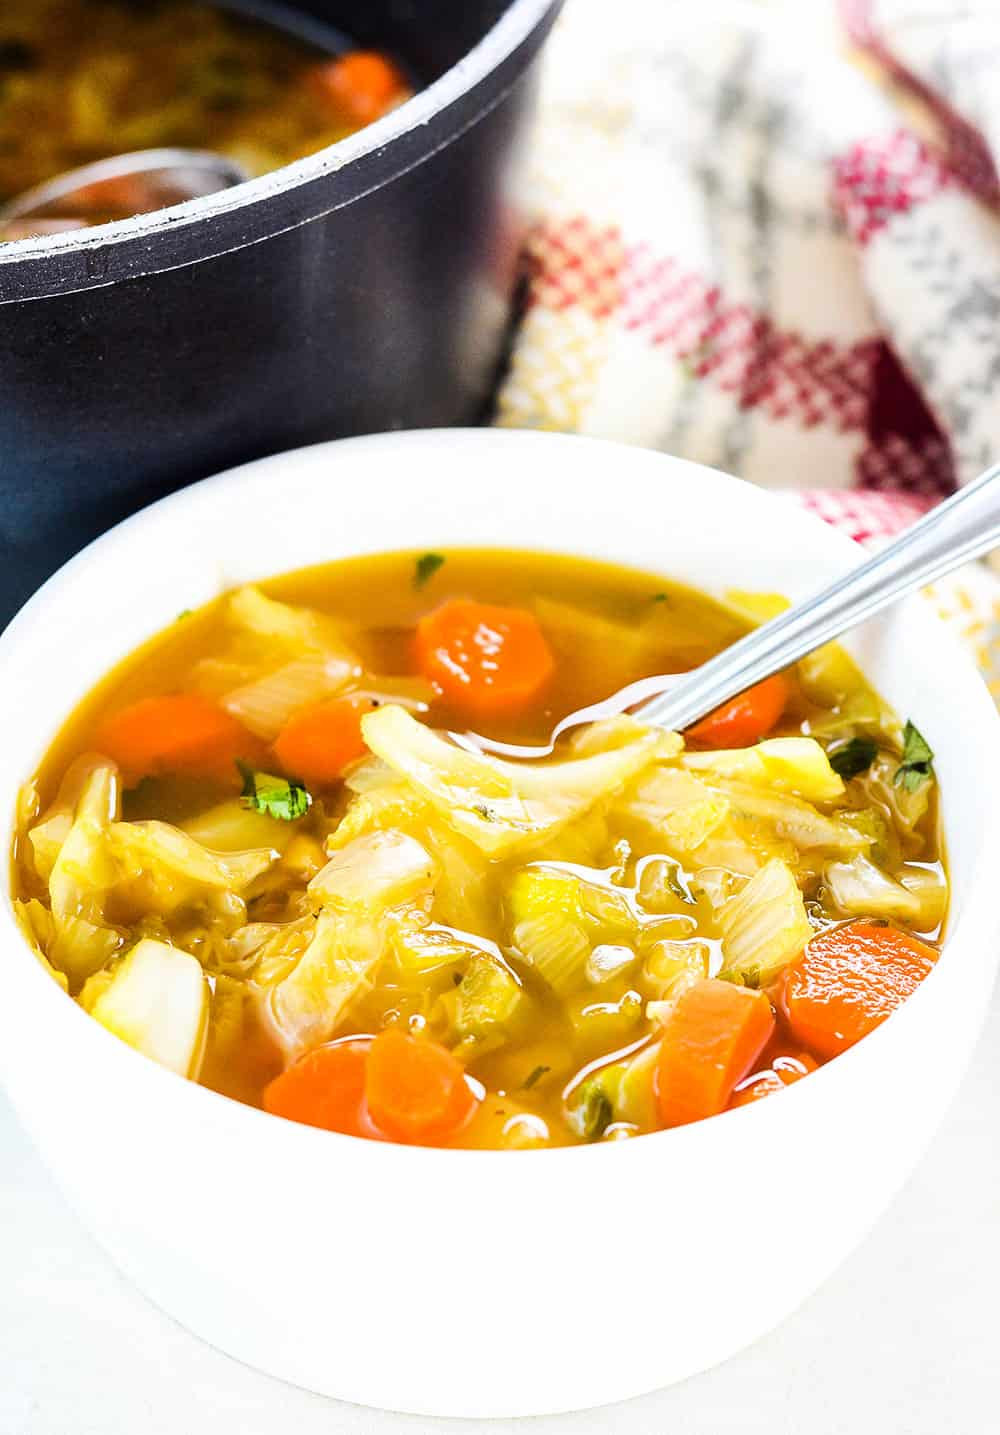 Cabbage Recipes Vegan
 Vegan Cabbage Soup Recipe